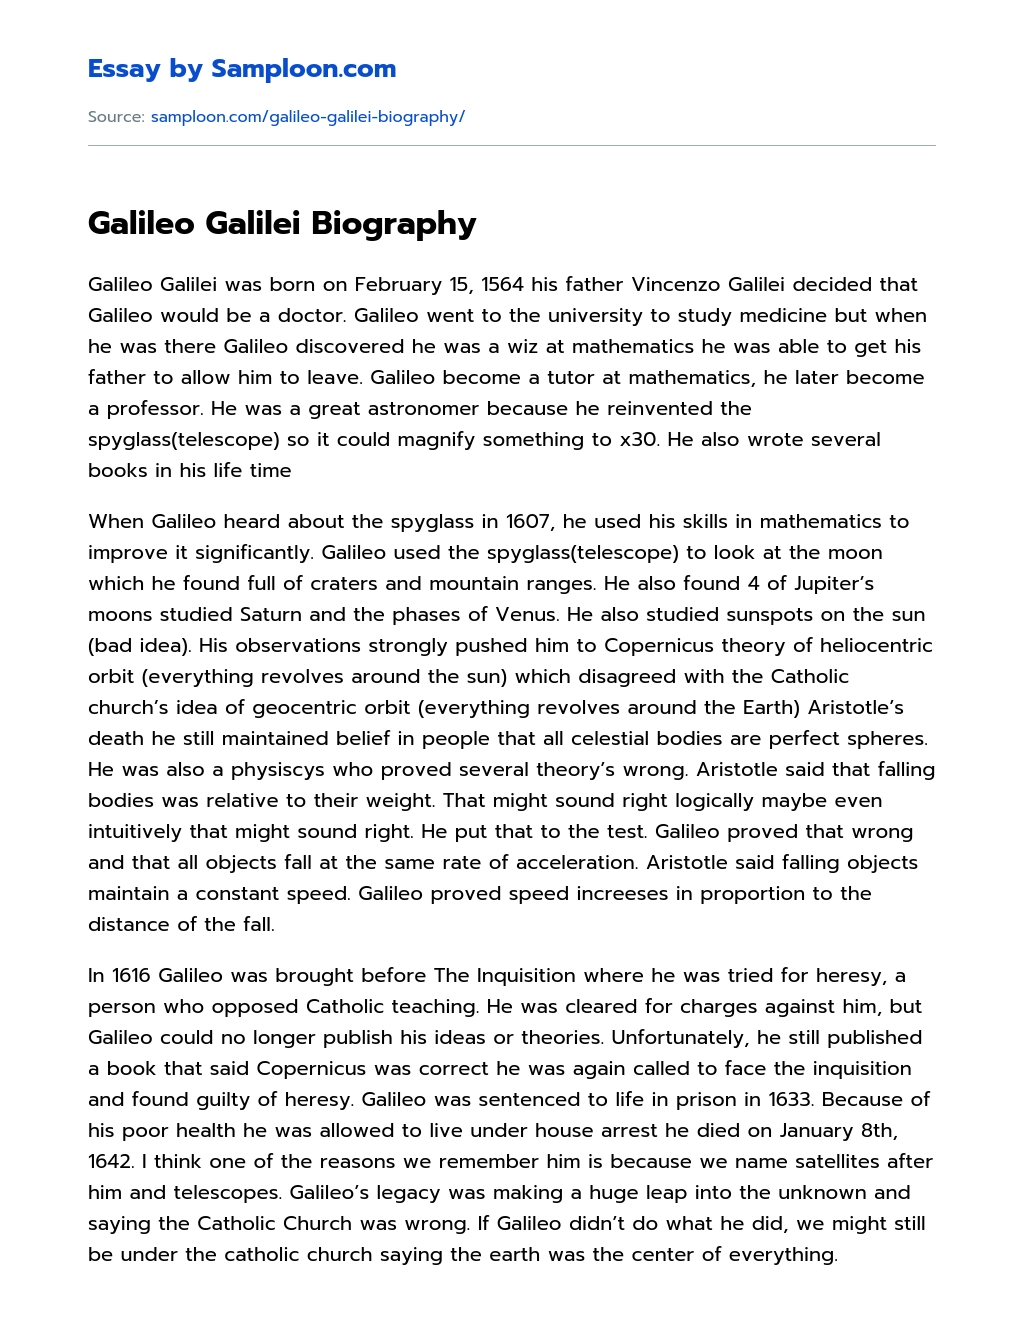 Galileo Galilei Biography essay